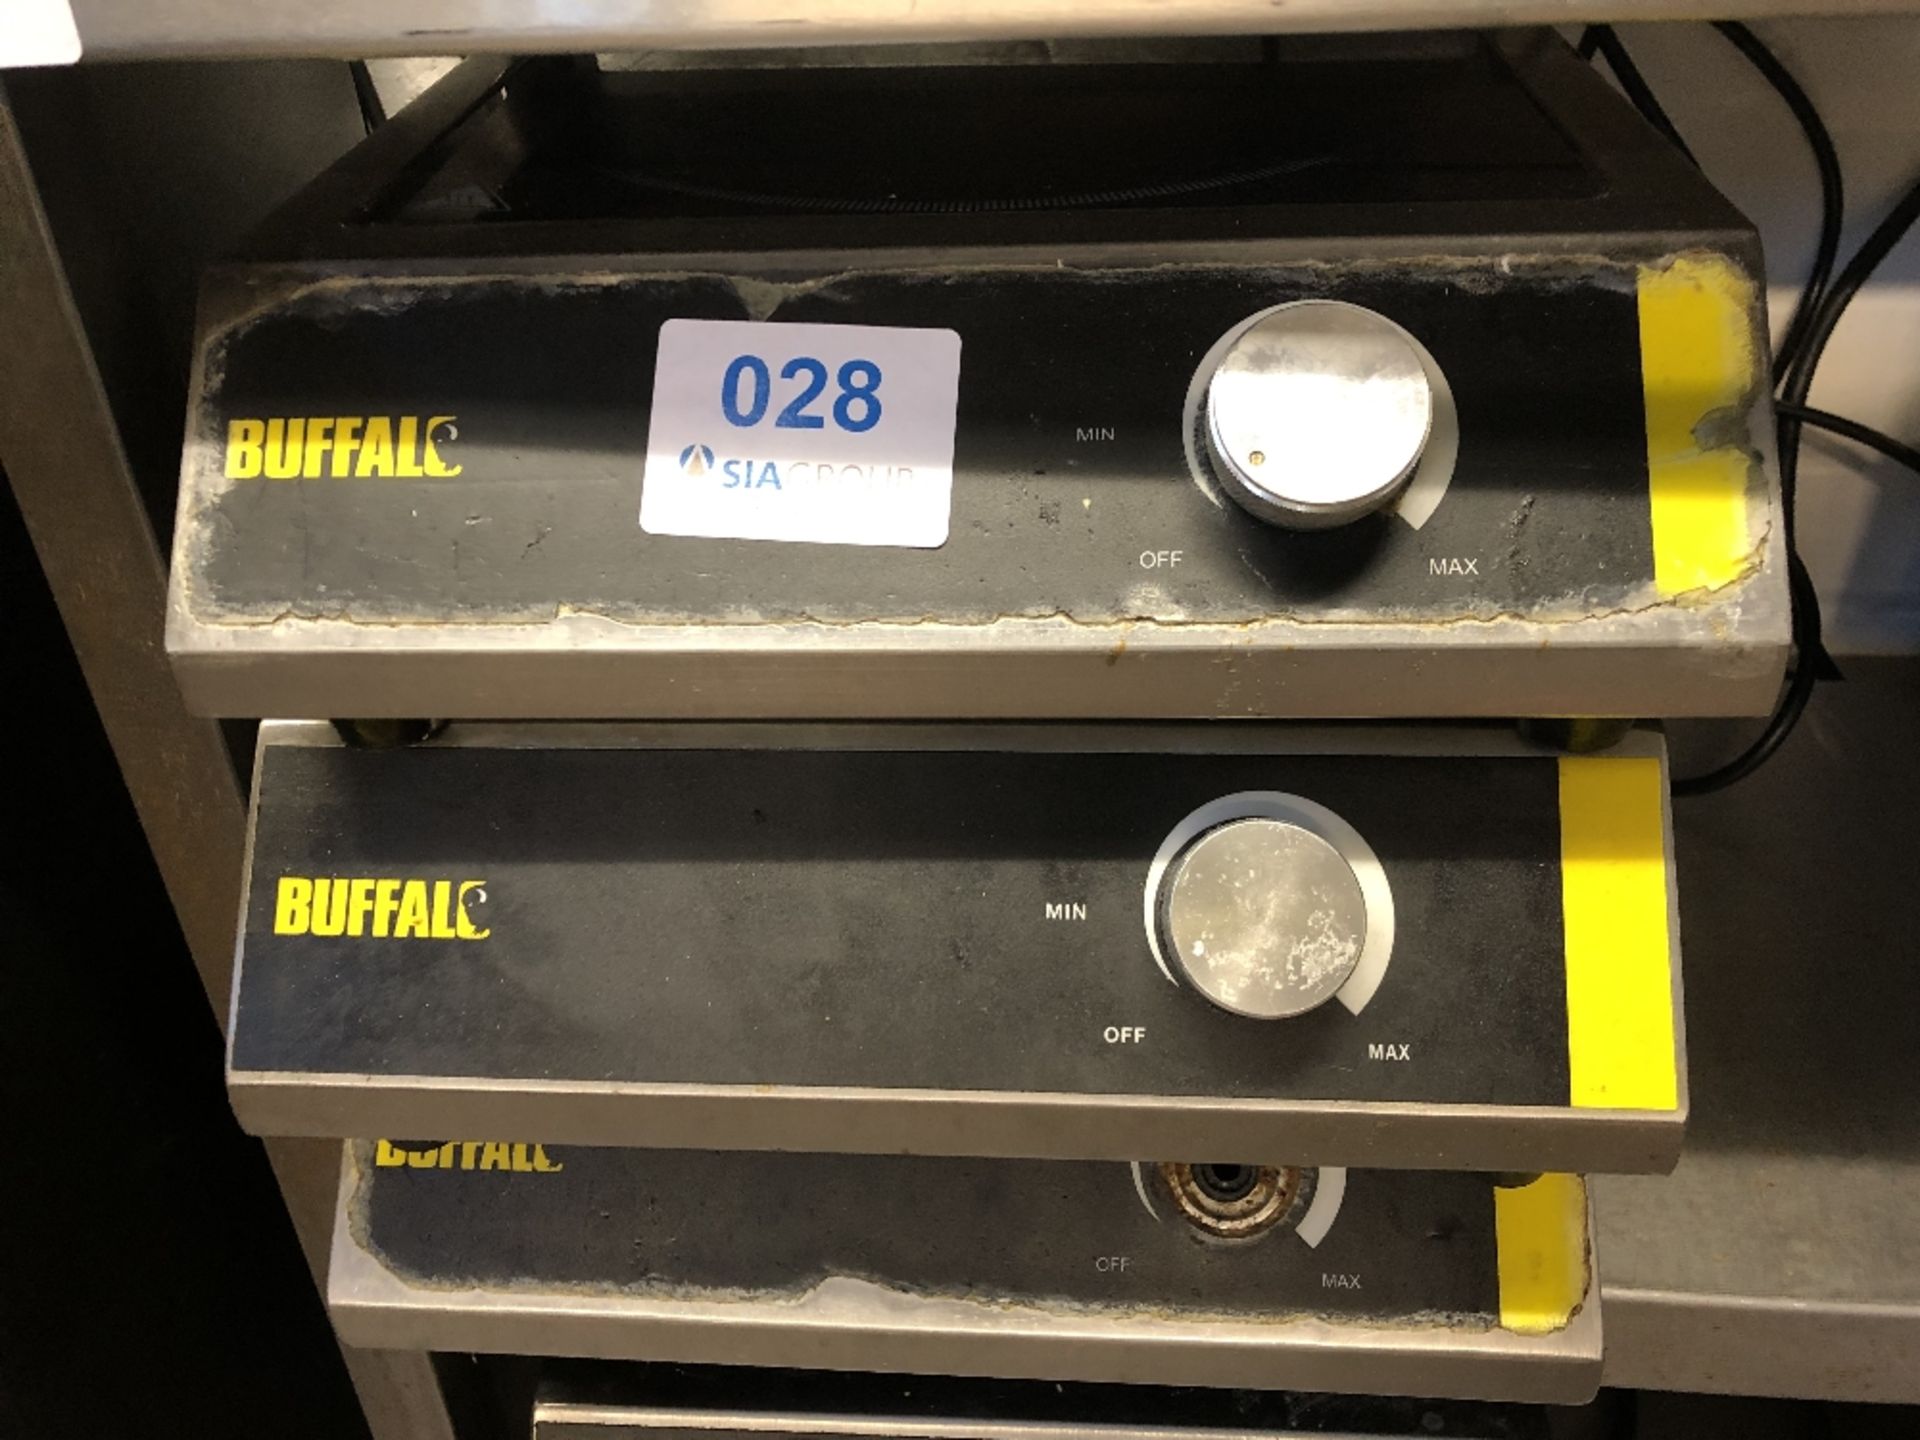 (3) Buffalo CE208 Single Zone 3kW Induction Hobs